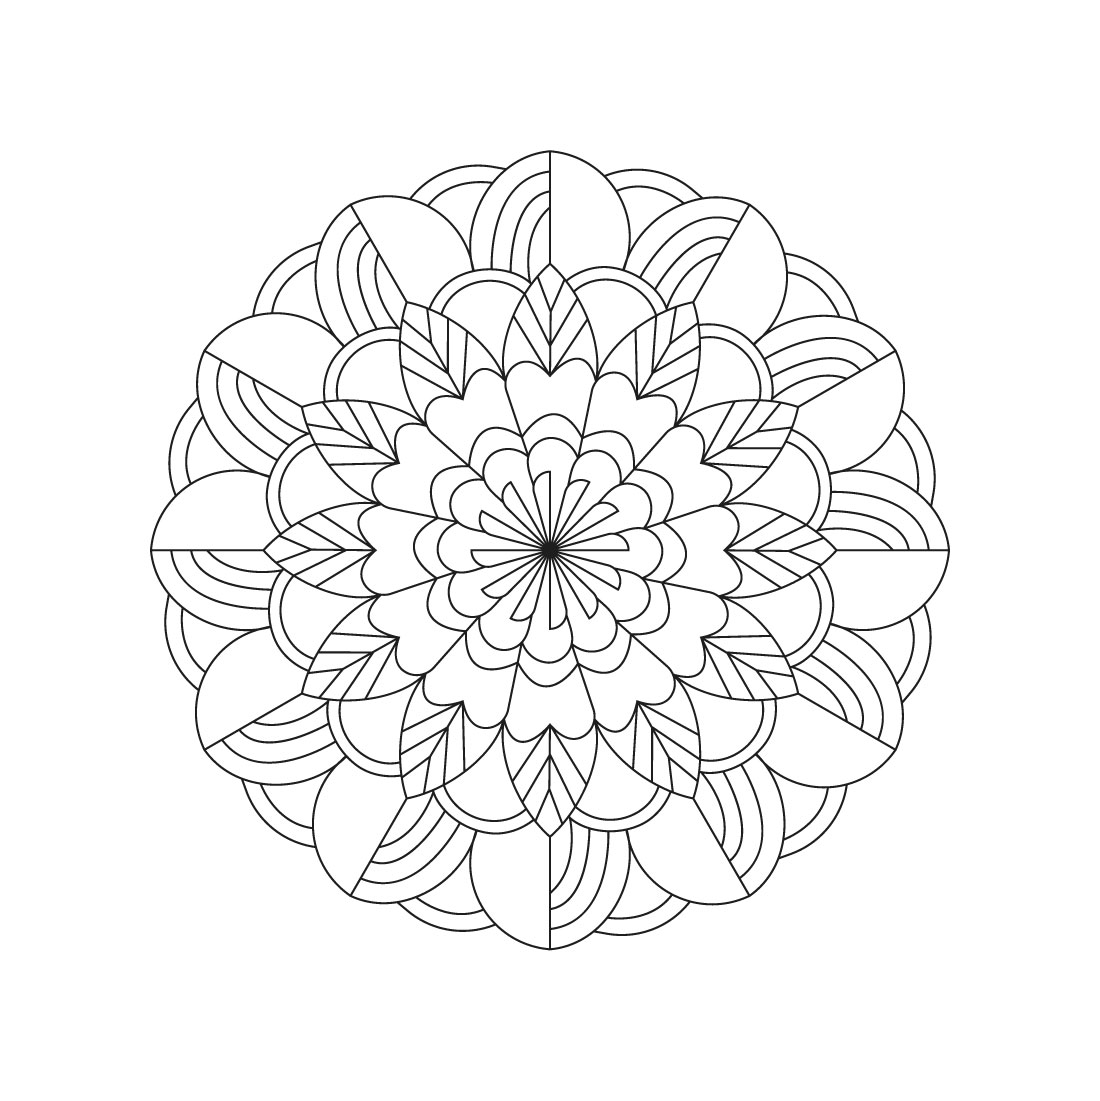 bundle of 10 peaceful patterns mandala coloring book pages 11 51